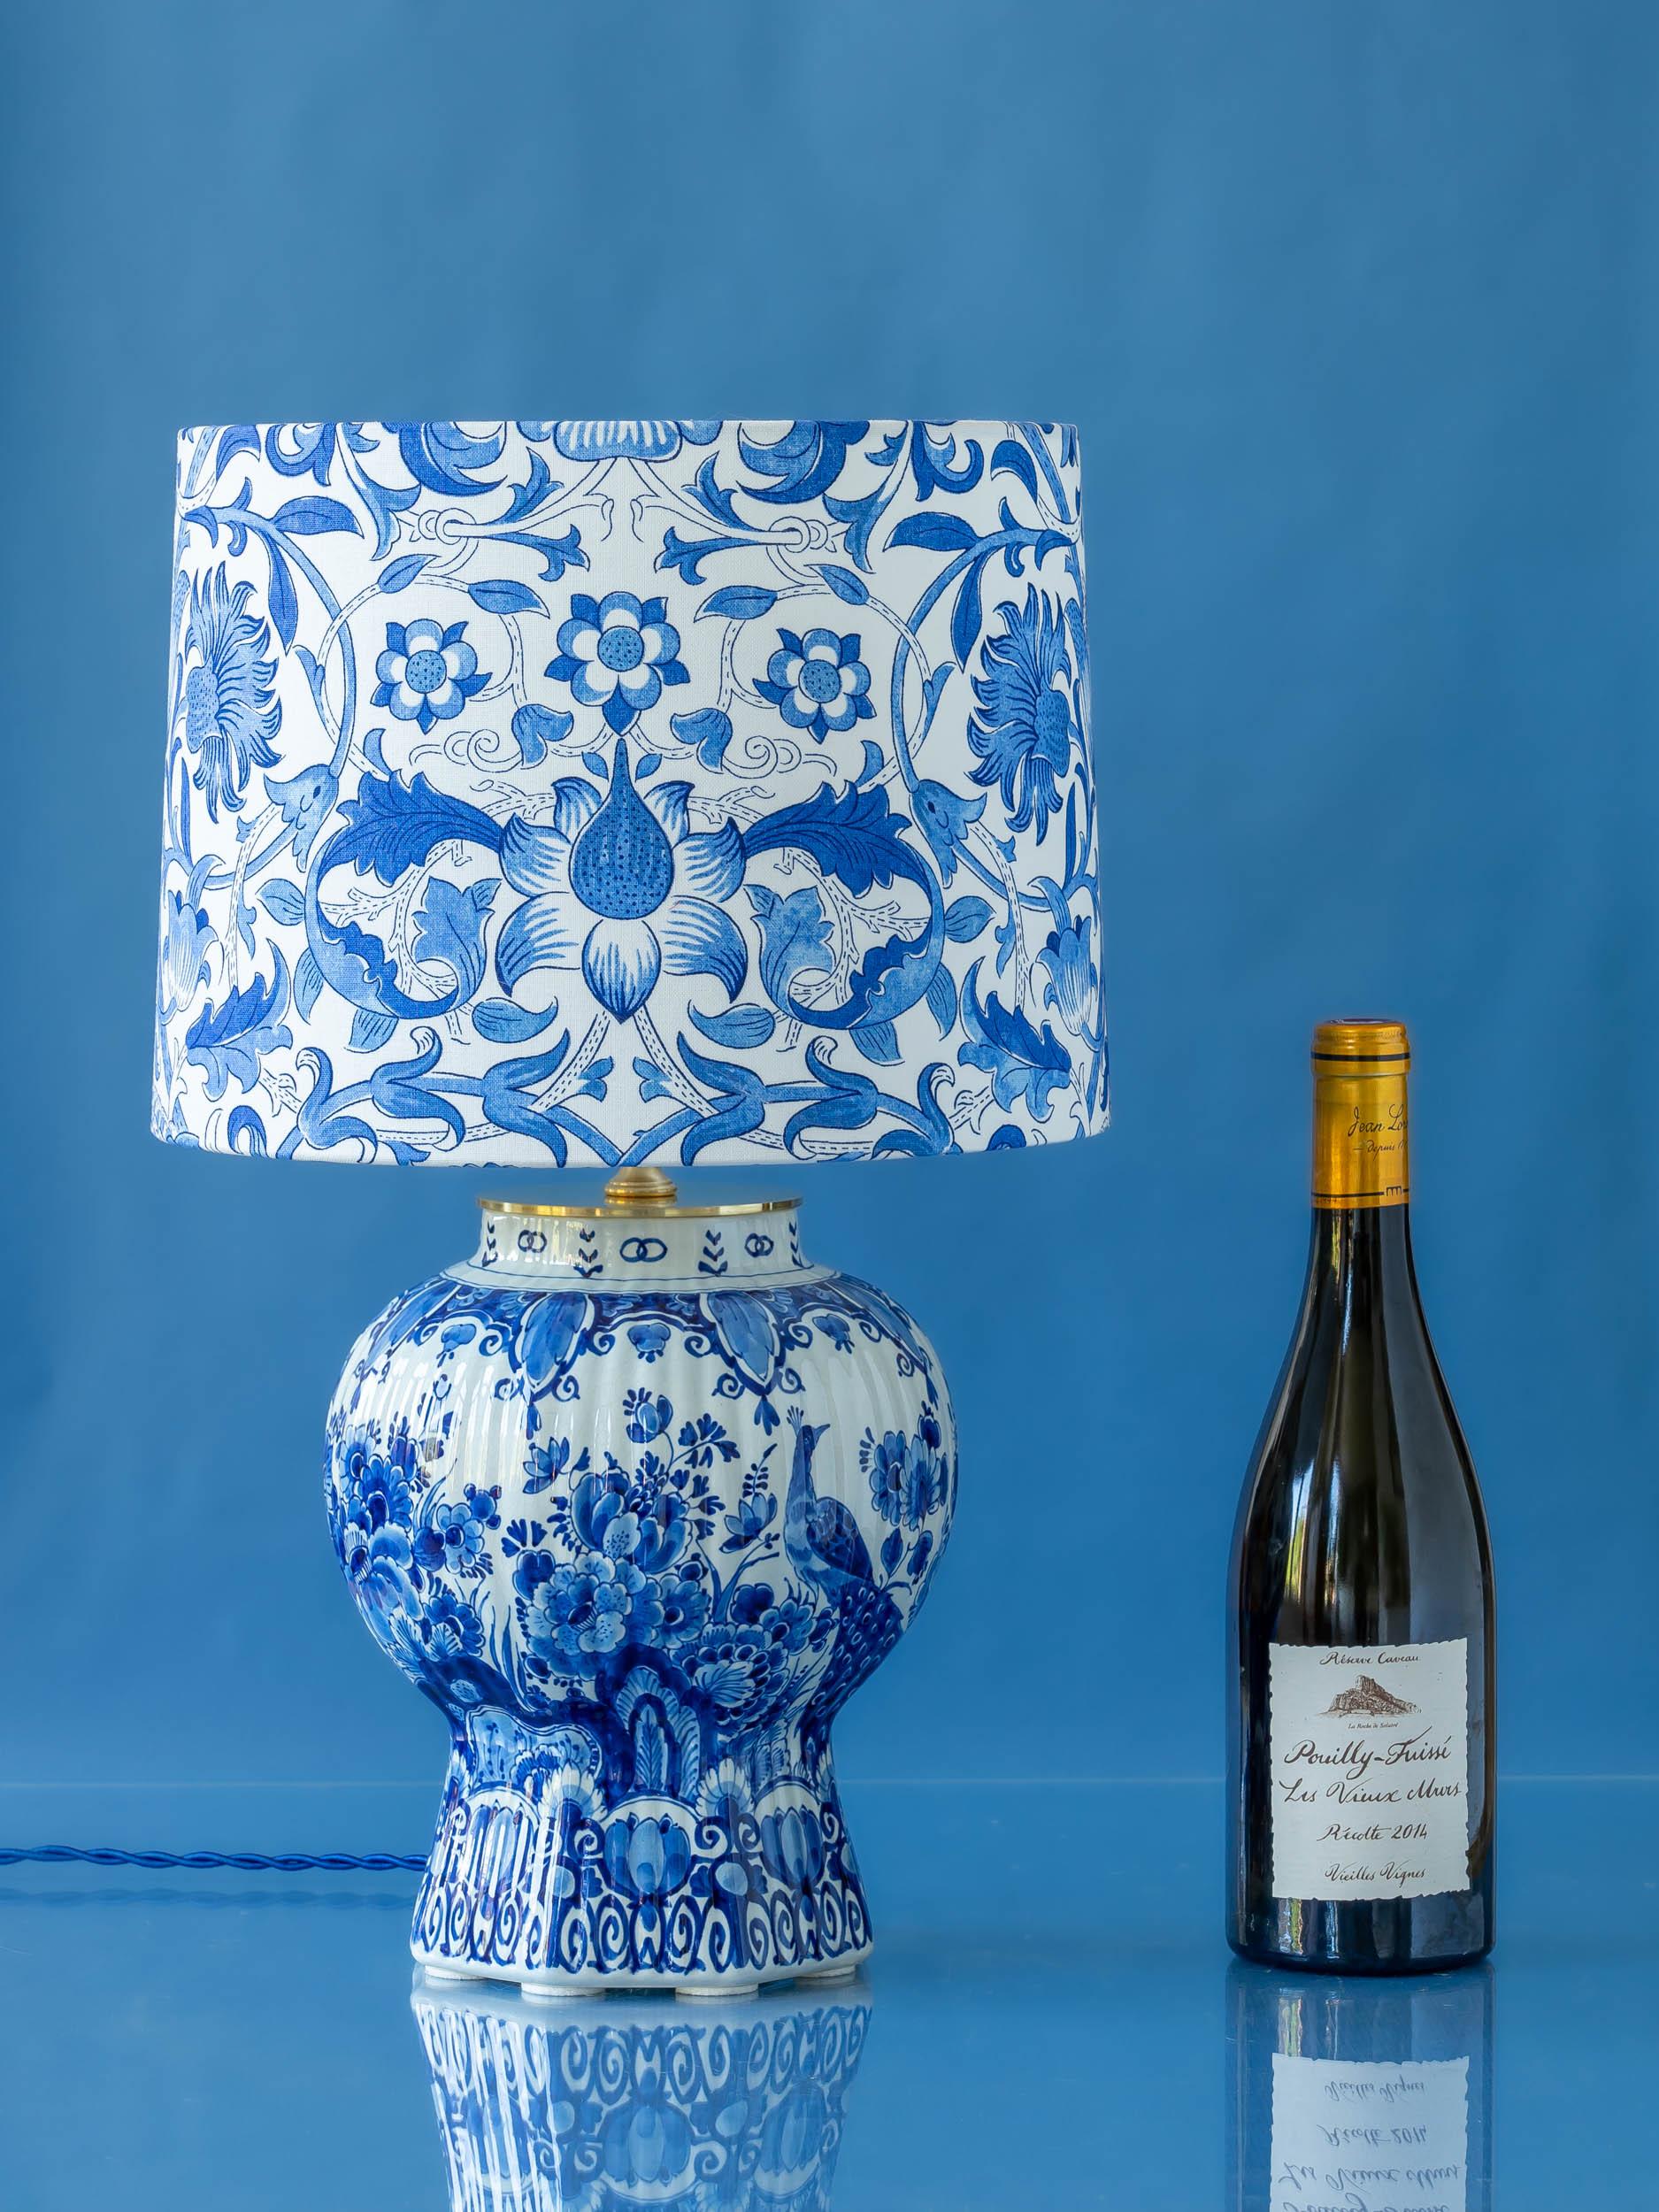 Dutch Royal Delft Blue 1940 Table Lamp, William Morris Lampshade